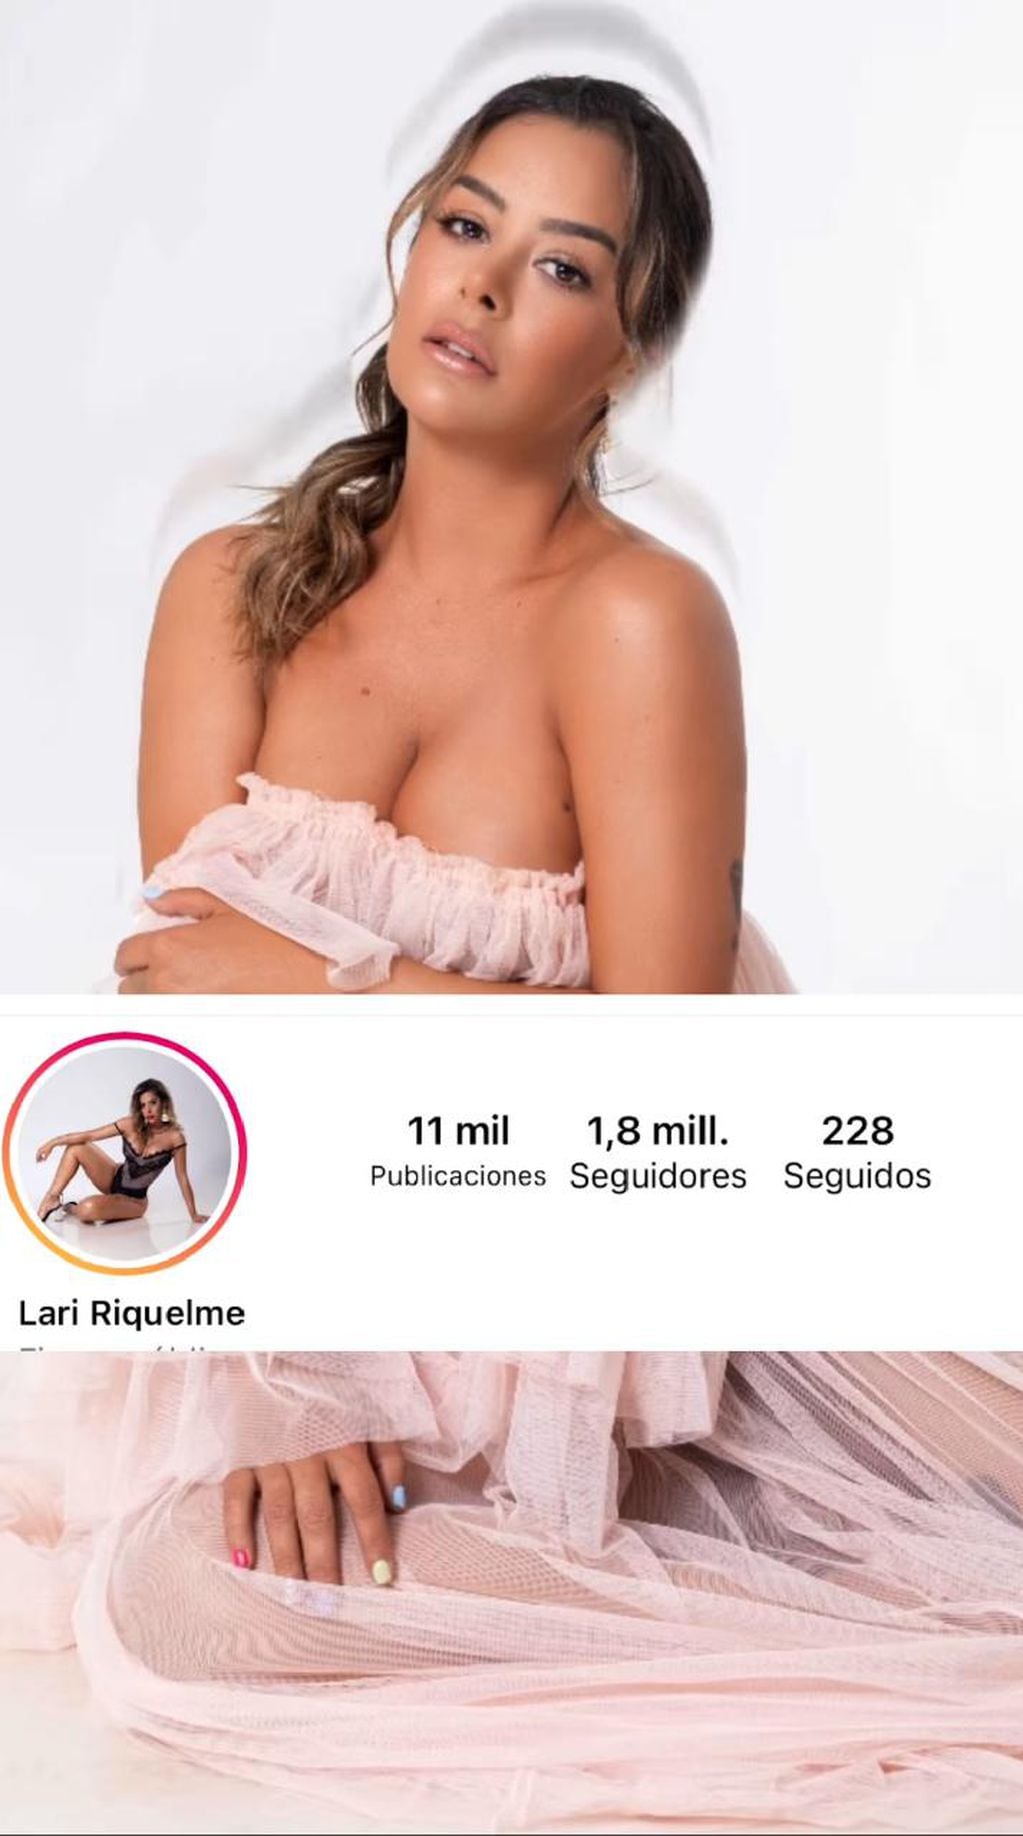 Larissa Riquelme celebró sus 1,8 millones de seguidores en Instagram